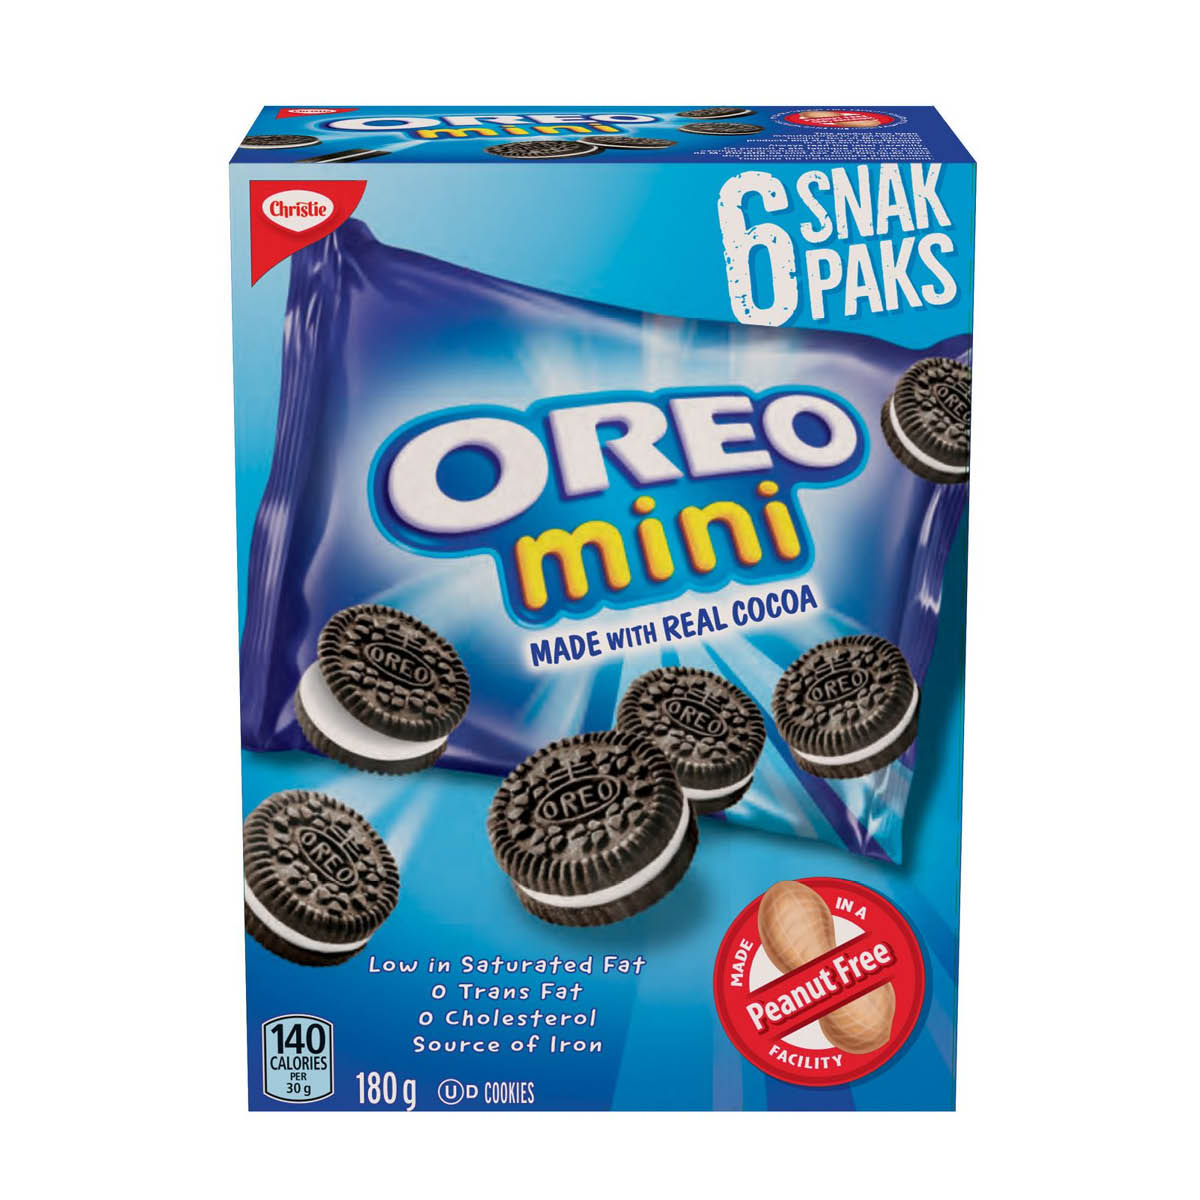 Christie Cookies Mini Oreo Snack Pack, 180g